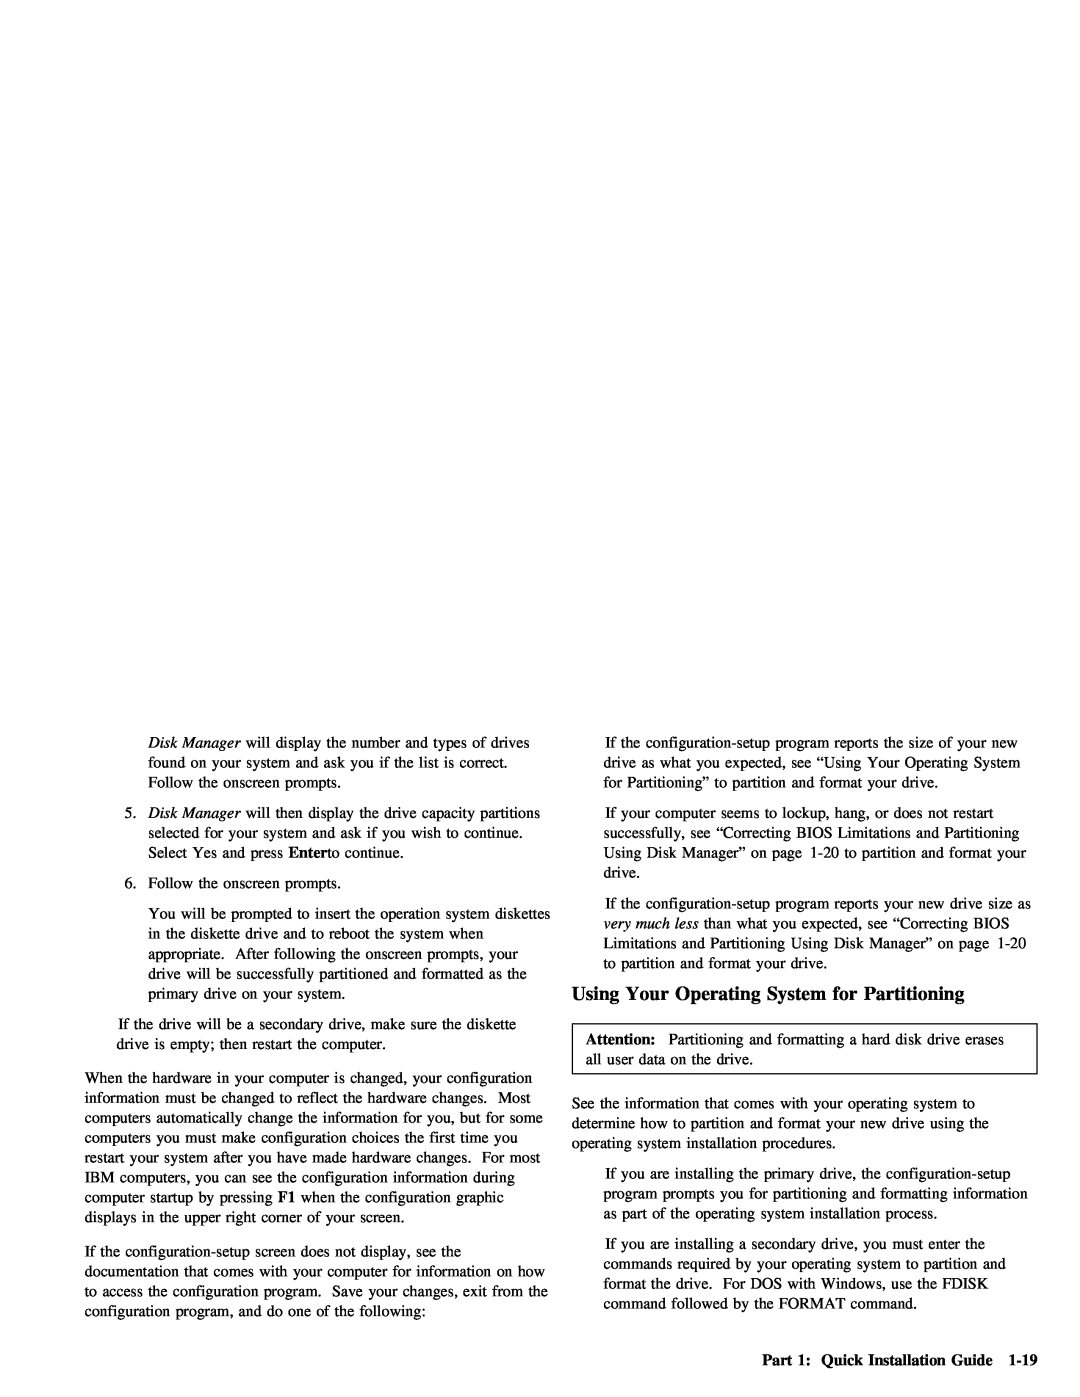 IBM ATA-3 manual System, Part 1 Quick Installation Guide 